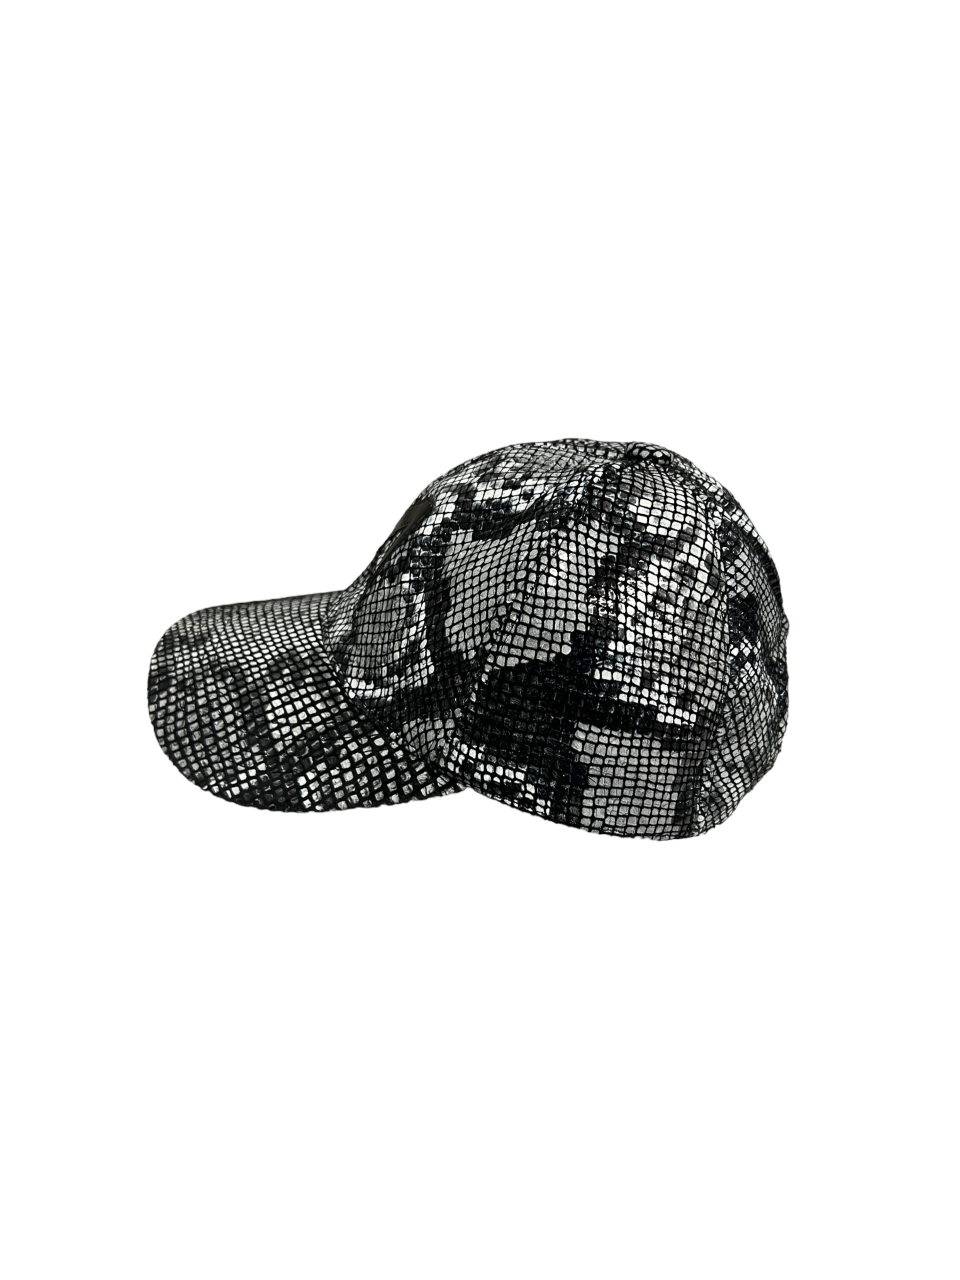 APOLINAR Exotic hat black logo